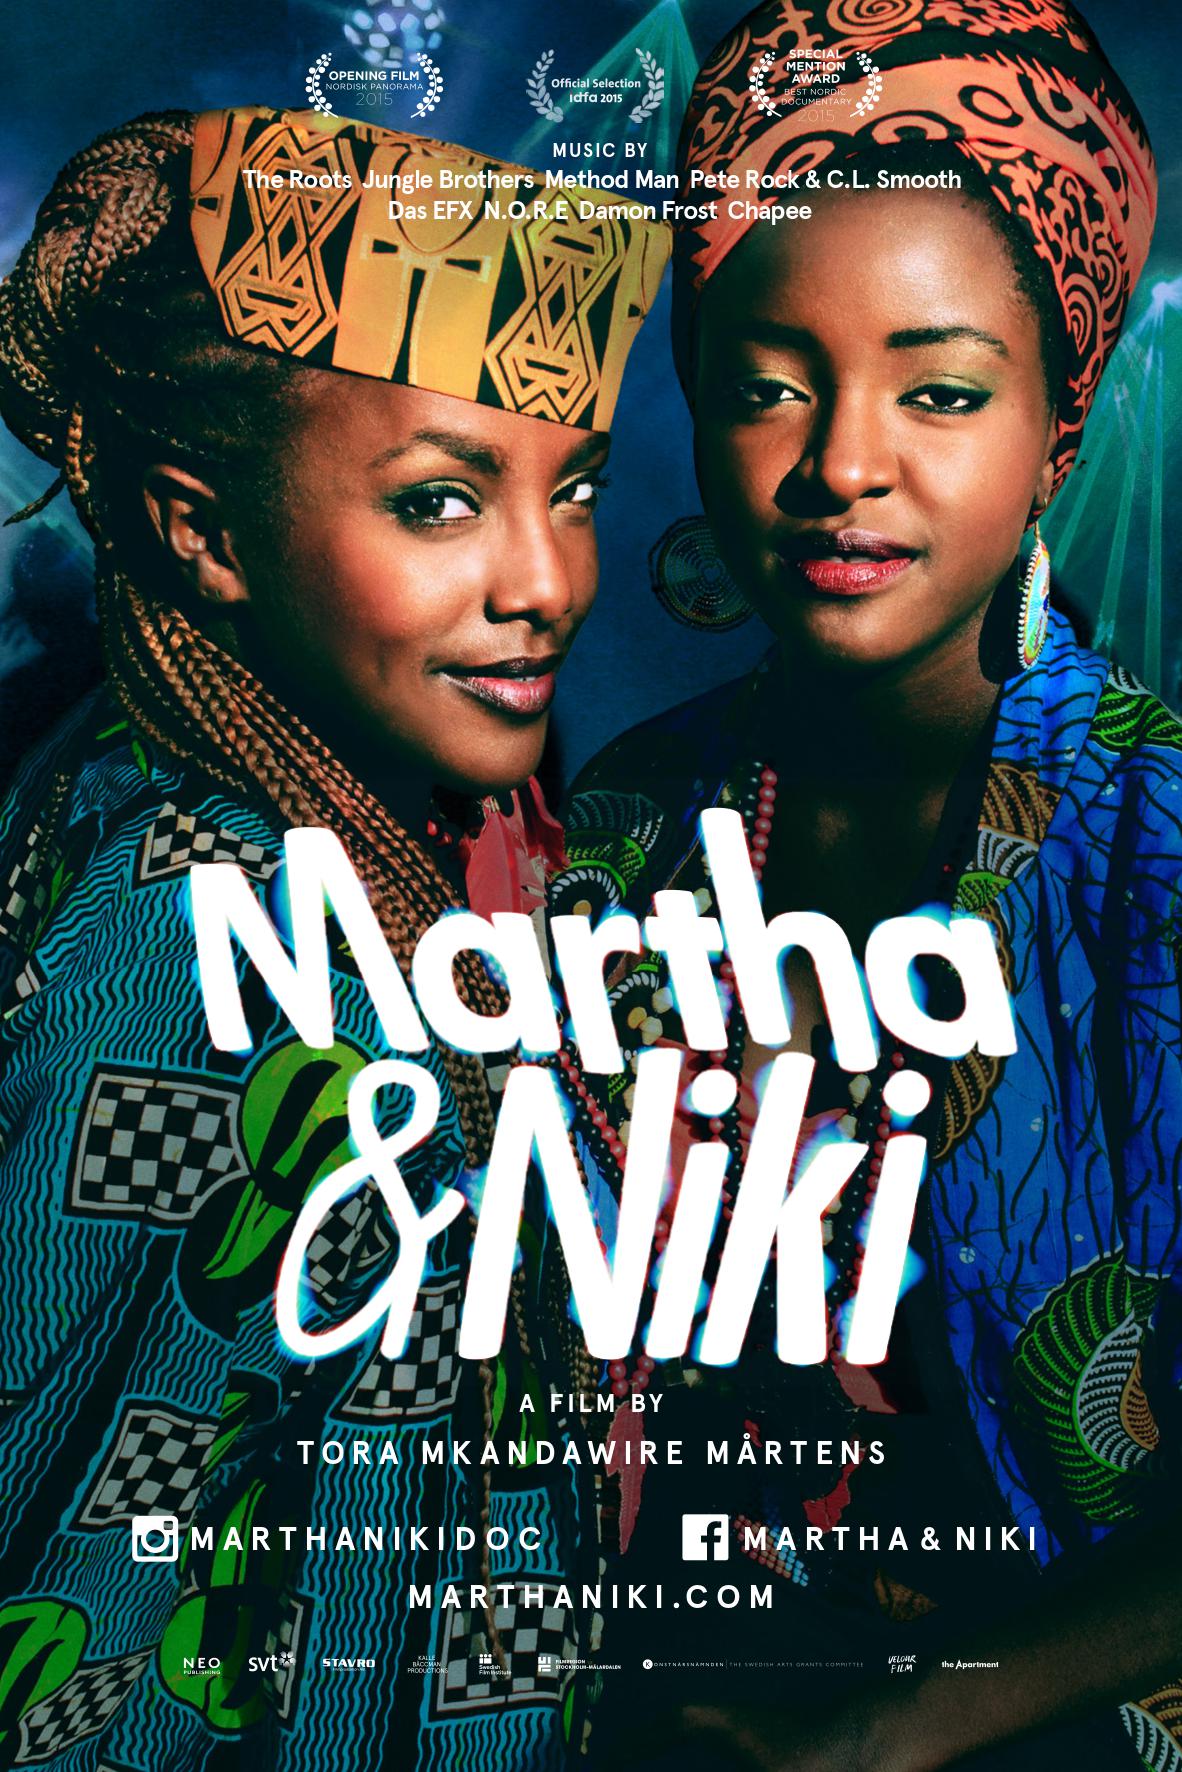 Martha & Niki A FILM BY TORA MKANDAWIRE MARTENS